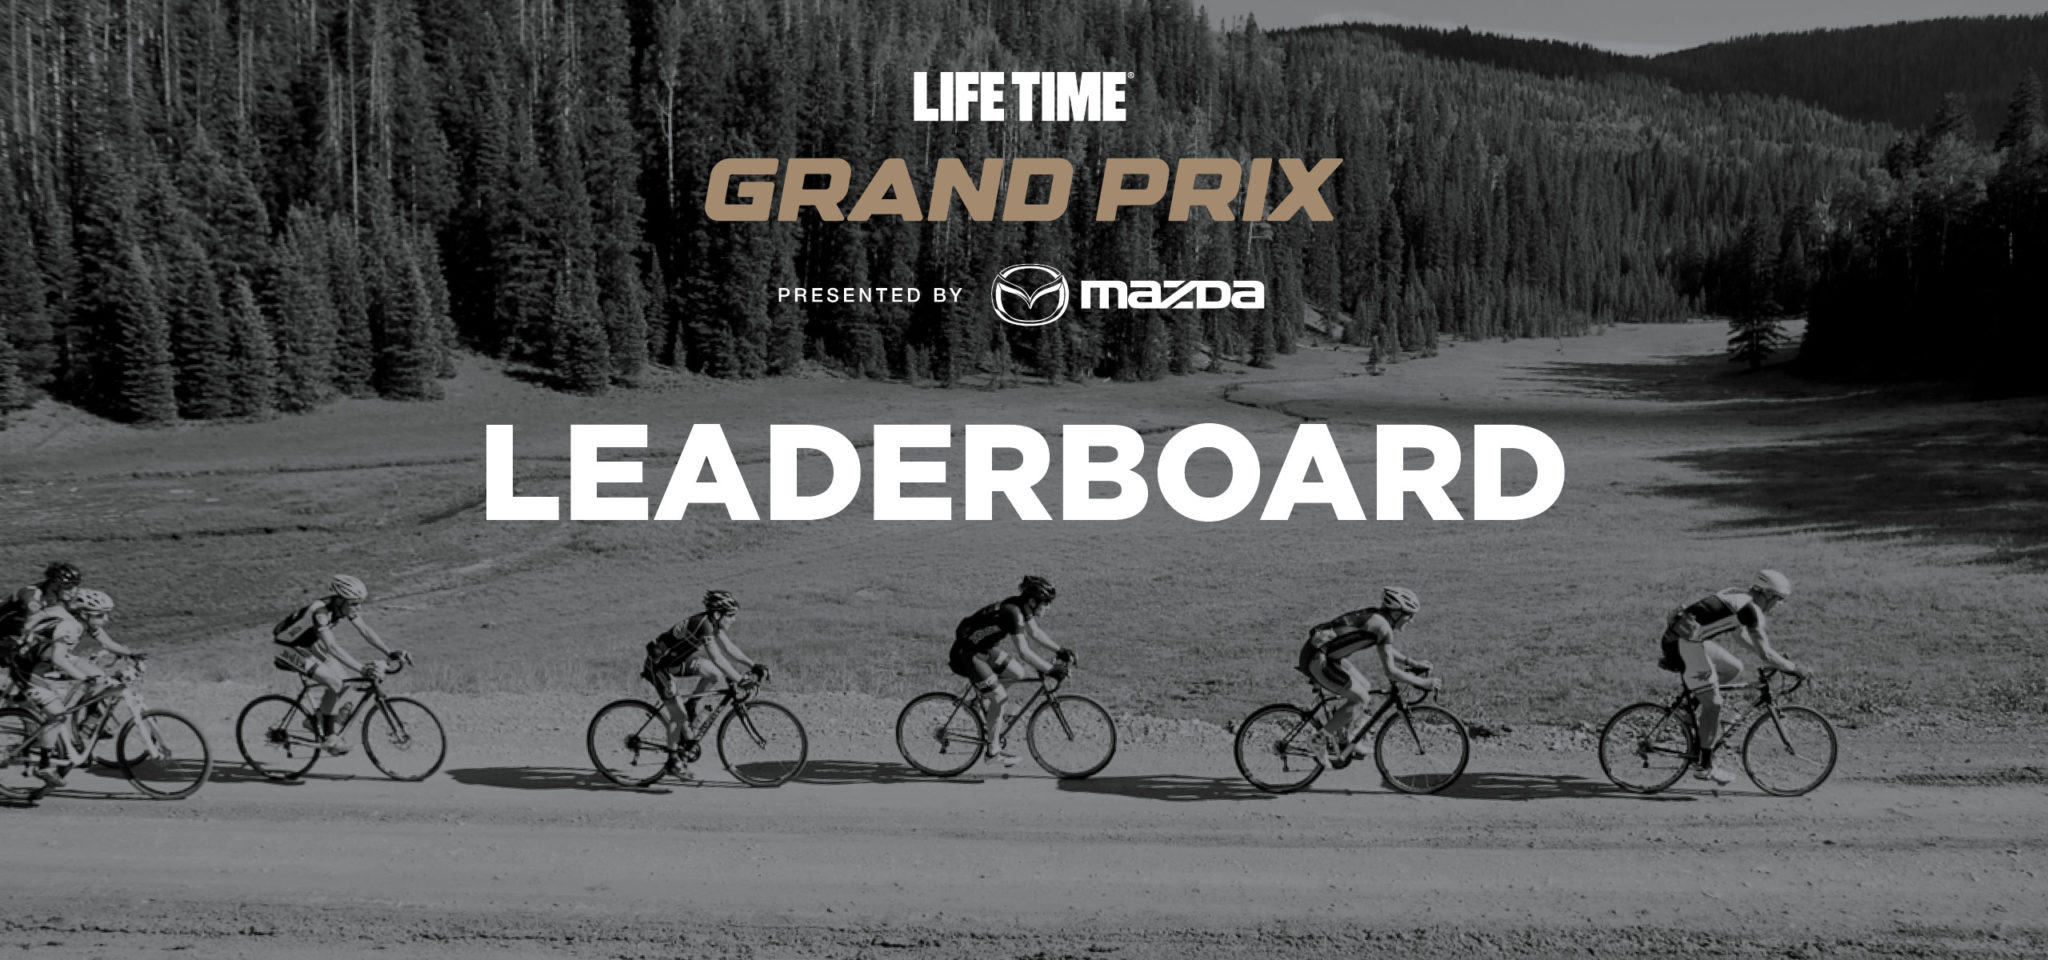 Leaderboard Life Time Grand Prix